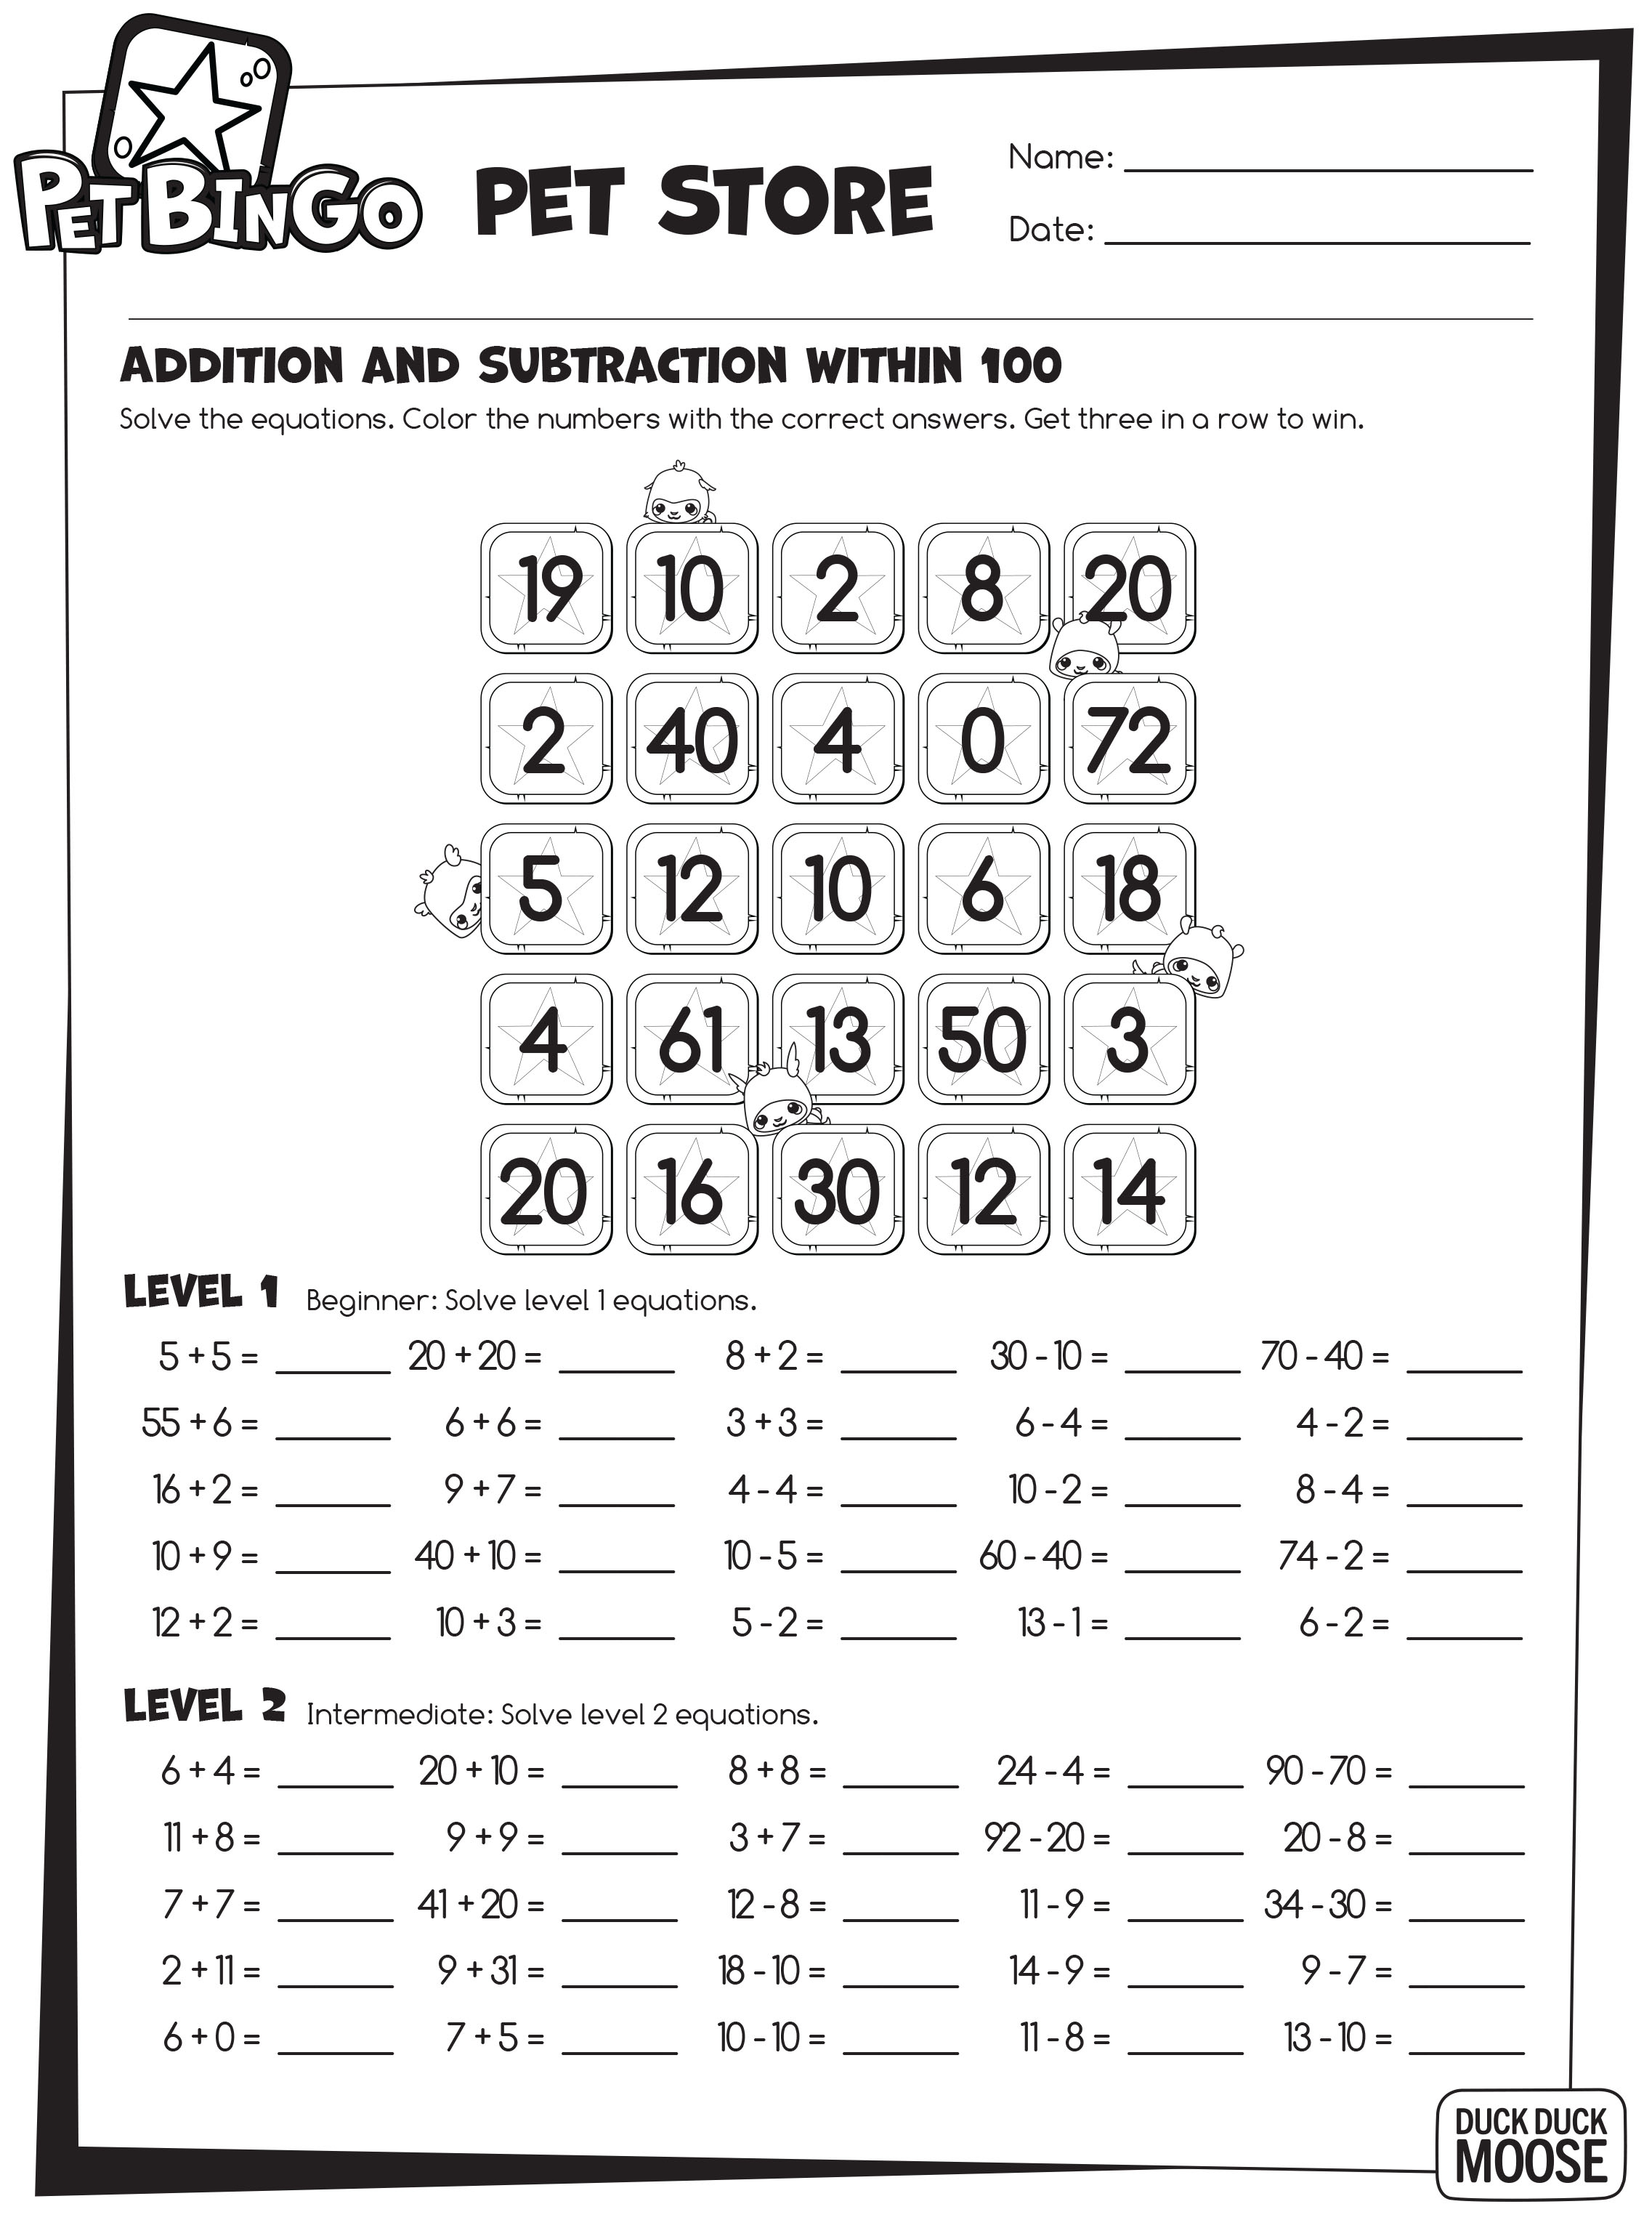 Keep On Learning! Pet Bingo Free Printable Worksheets. | Duck Duck Moose - Year 2 Free Printable Worksheets